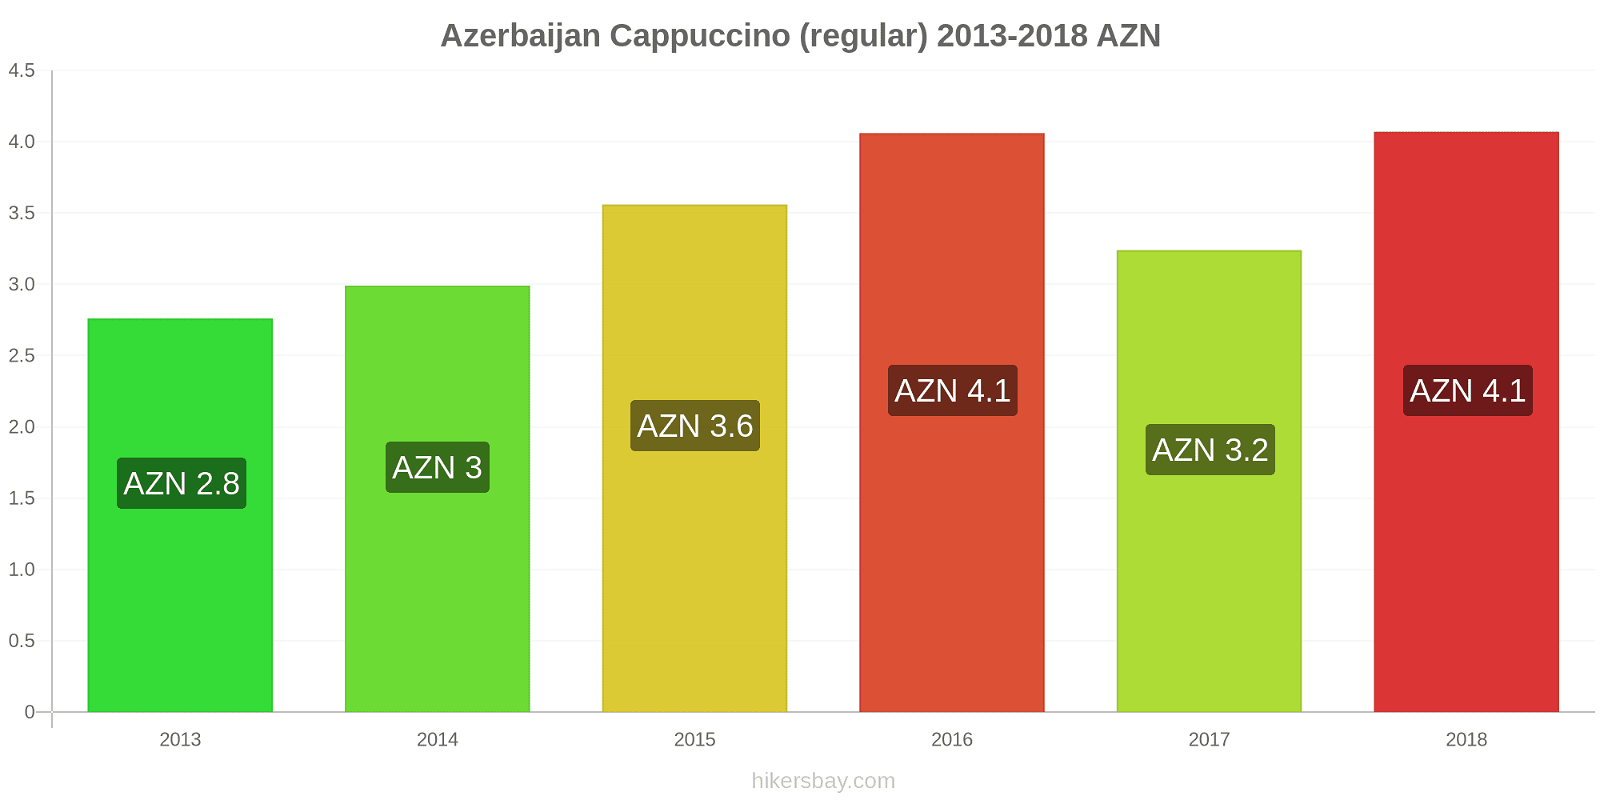 Azerbaijan price changes Cappuccino hikersbay.com